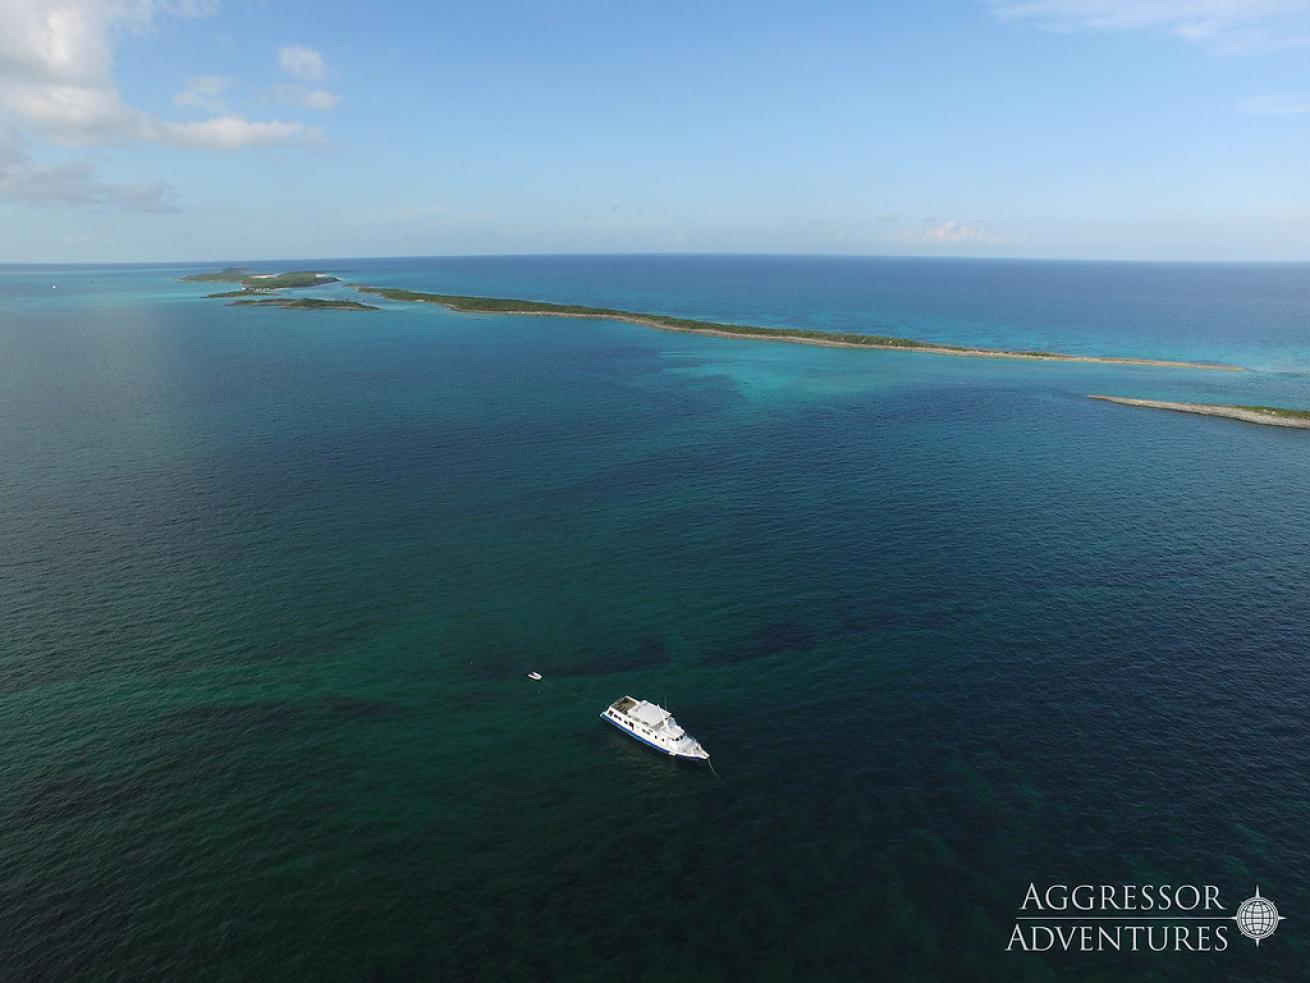 Bahamas Aggressor Drone